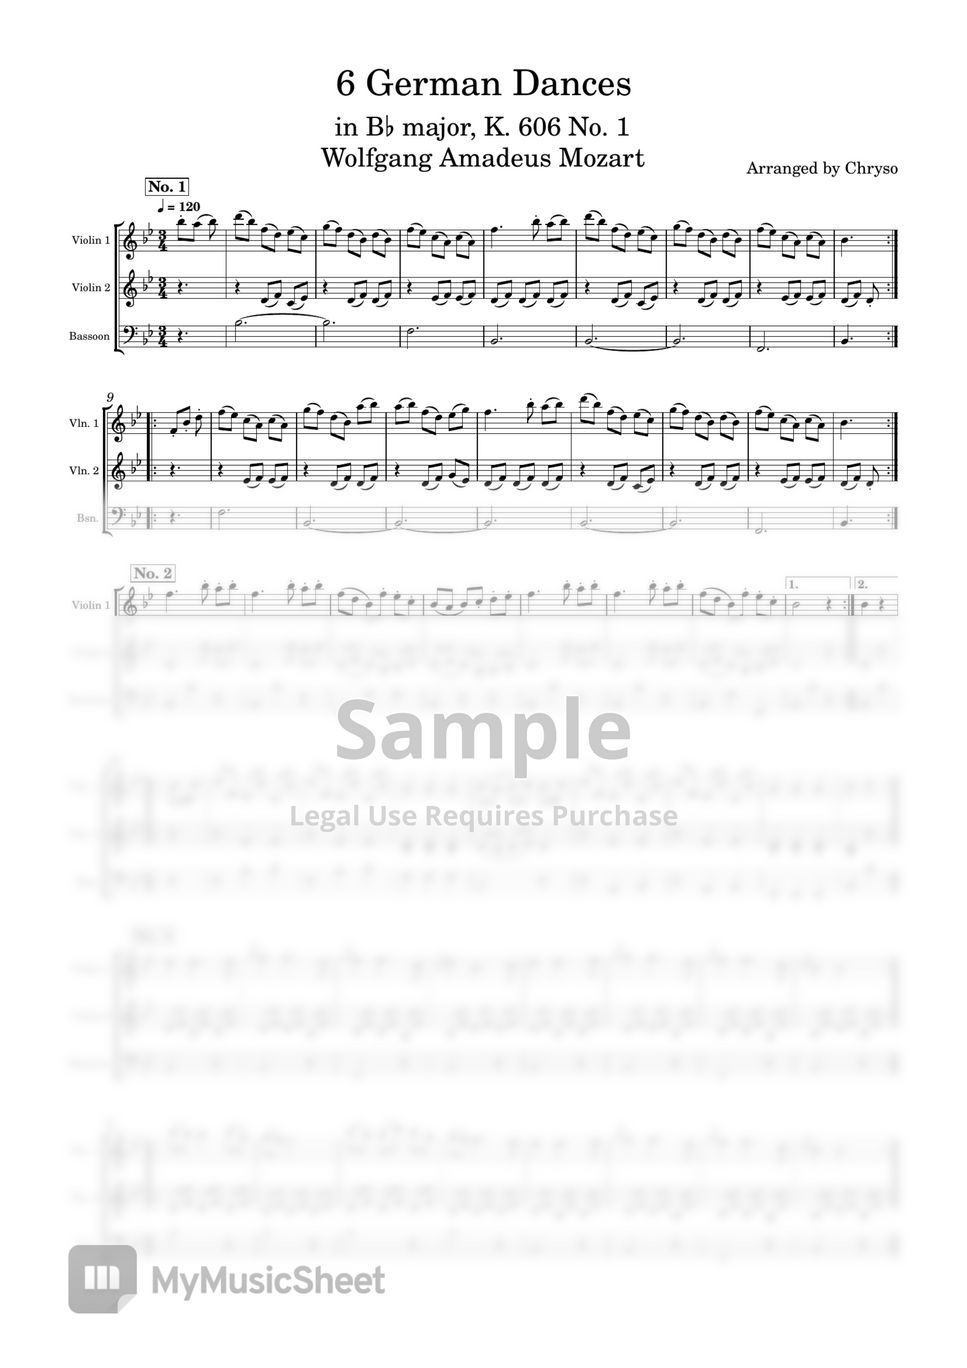 Wolfgang Amadeus Mozart - 52. 6 German Dances (pdf) by Chryso_Chrysoberyl